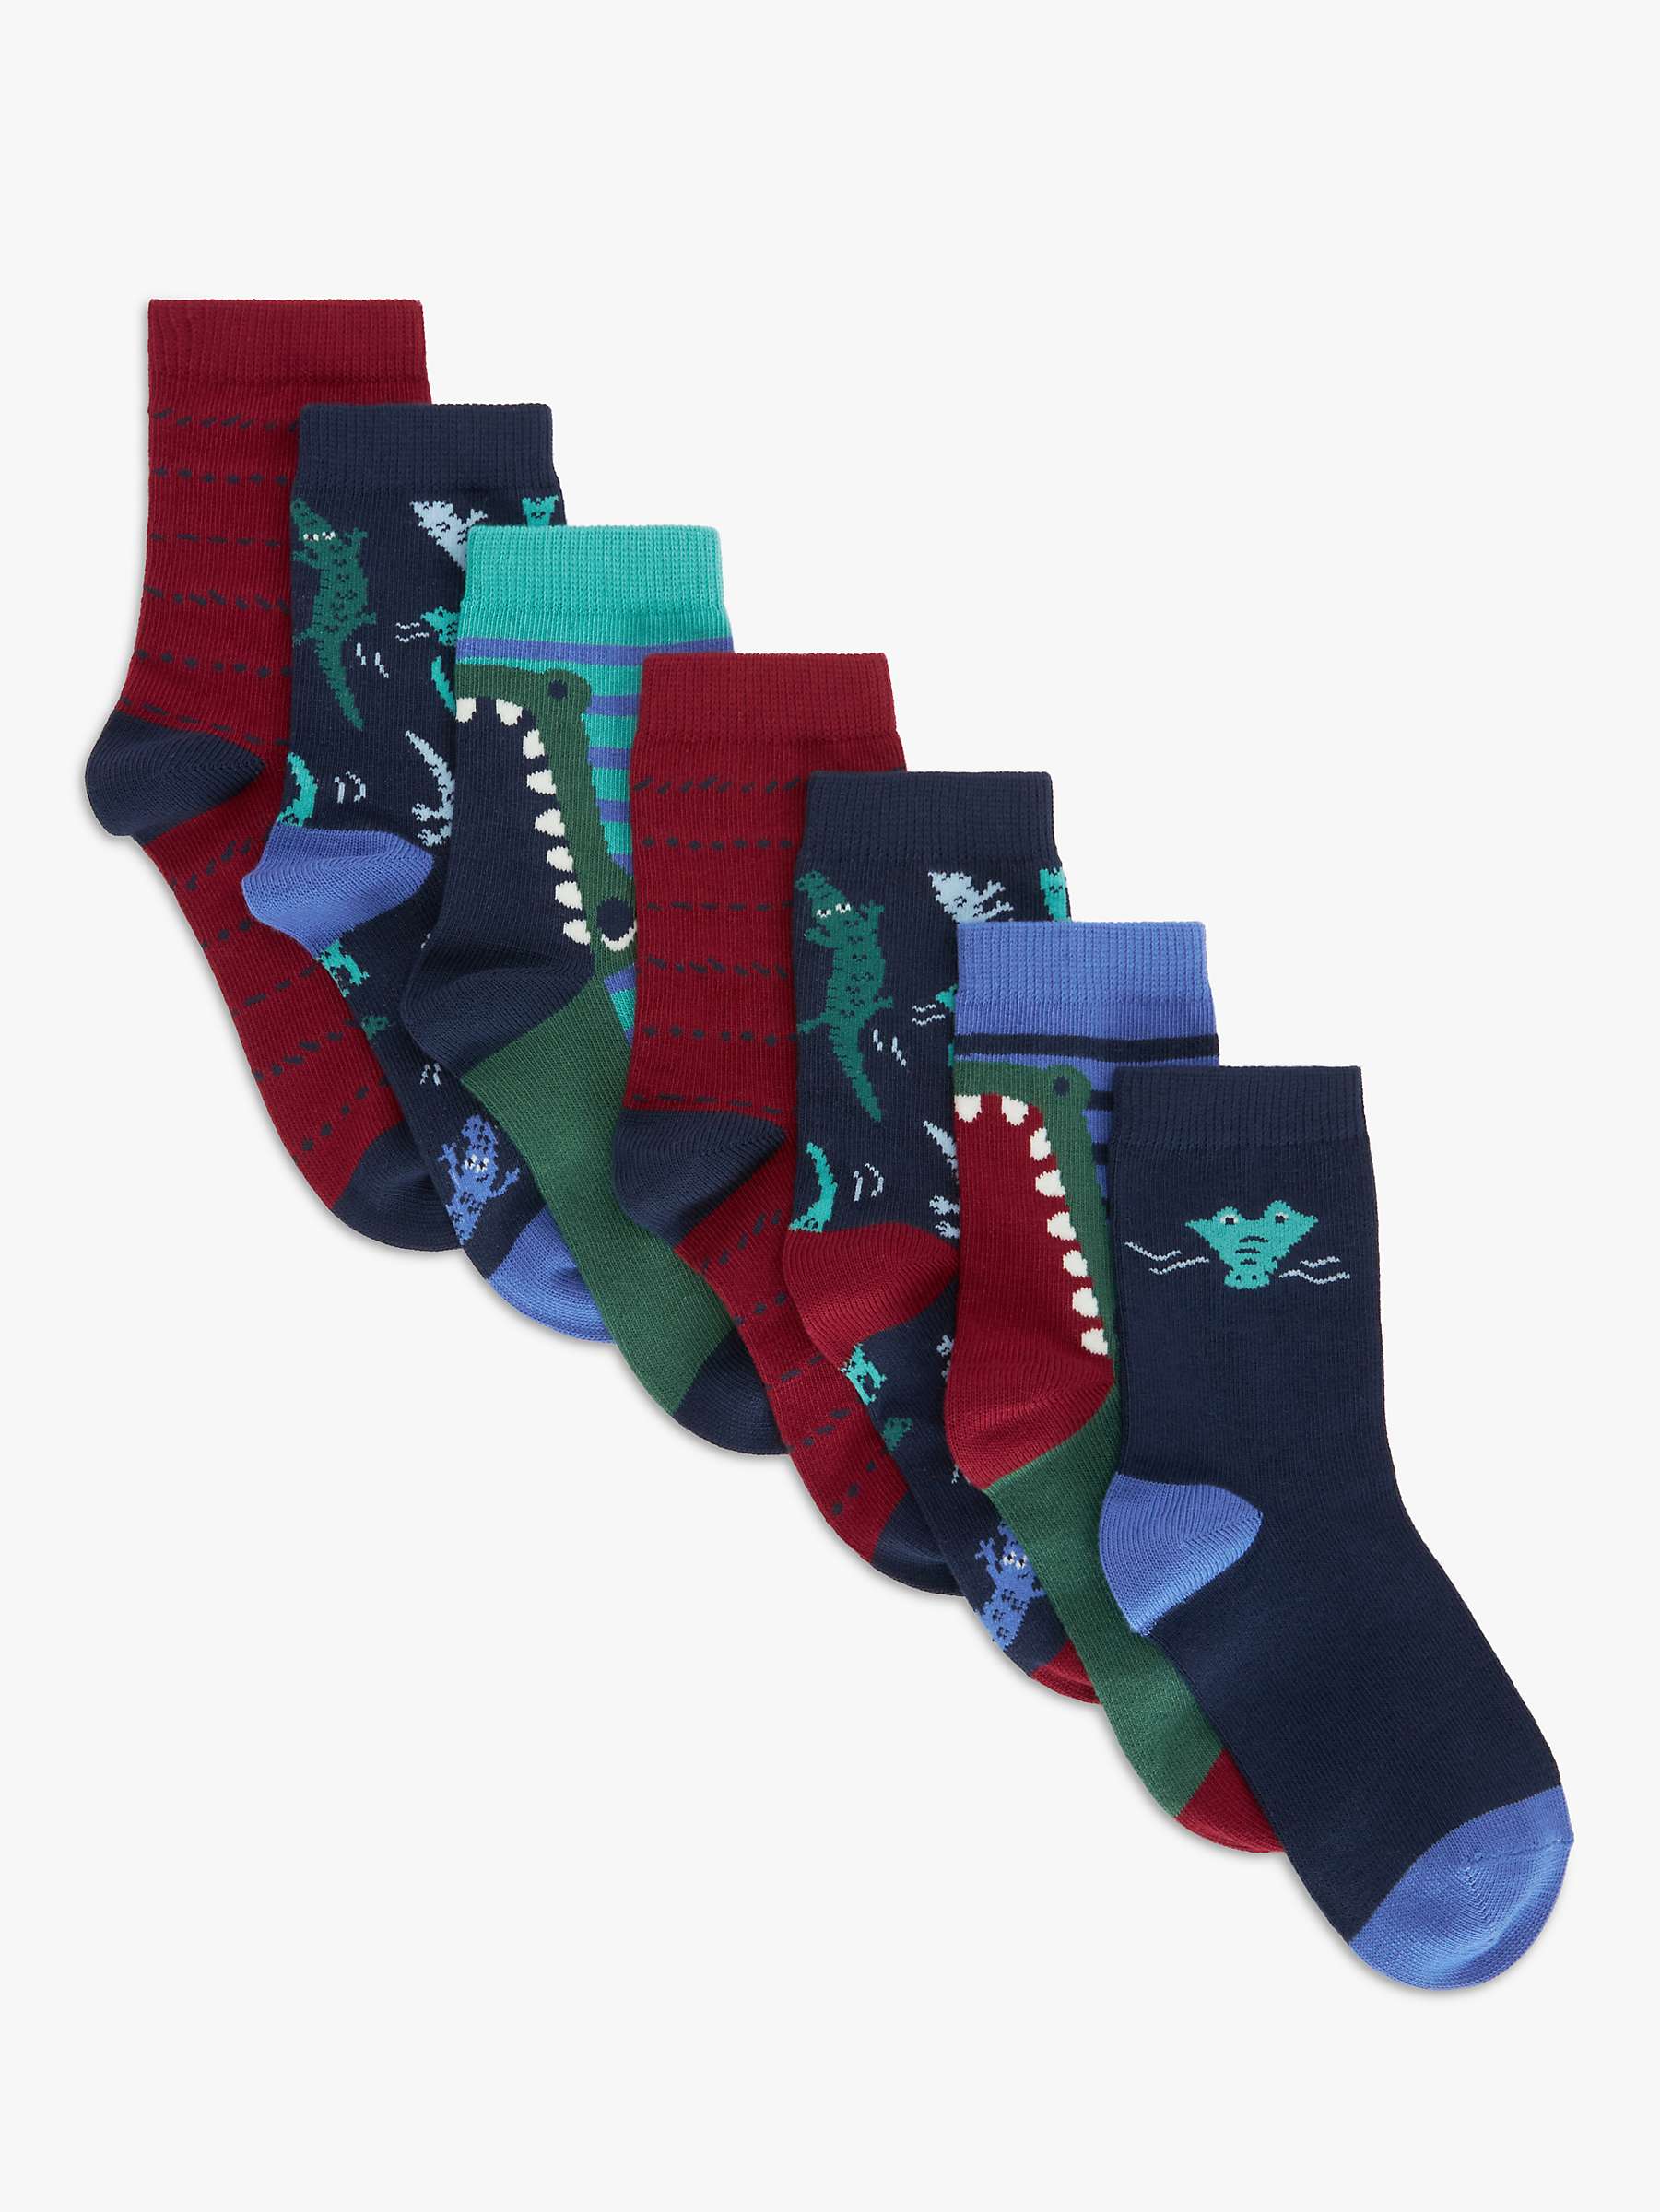 Buy John Lewis Kids' Croc Socks, Pack of 7, Multi Online at johnlewis.com